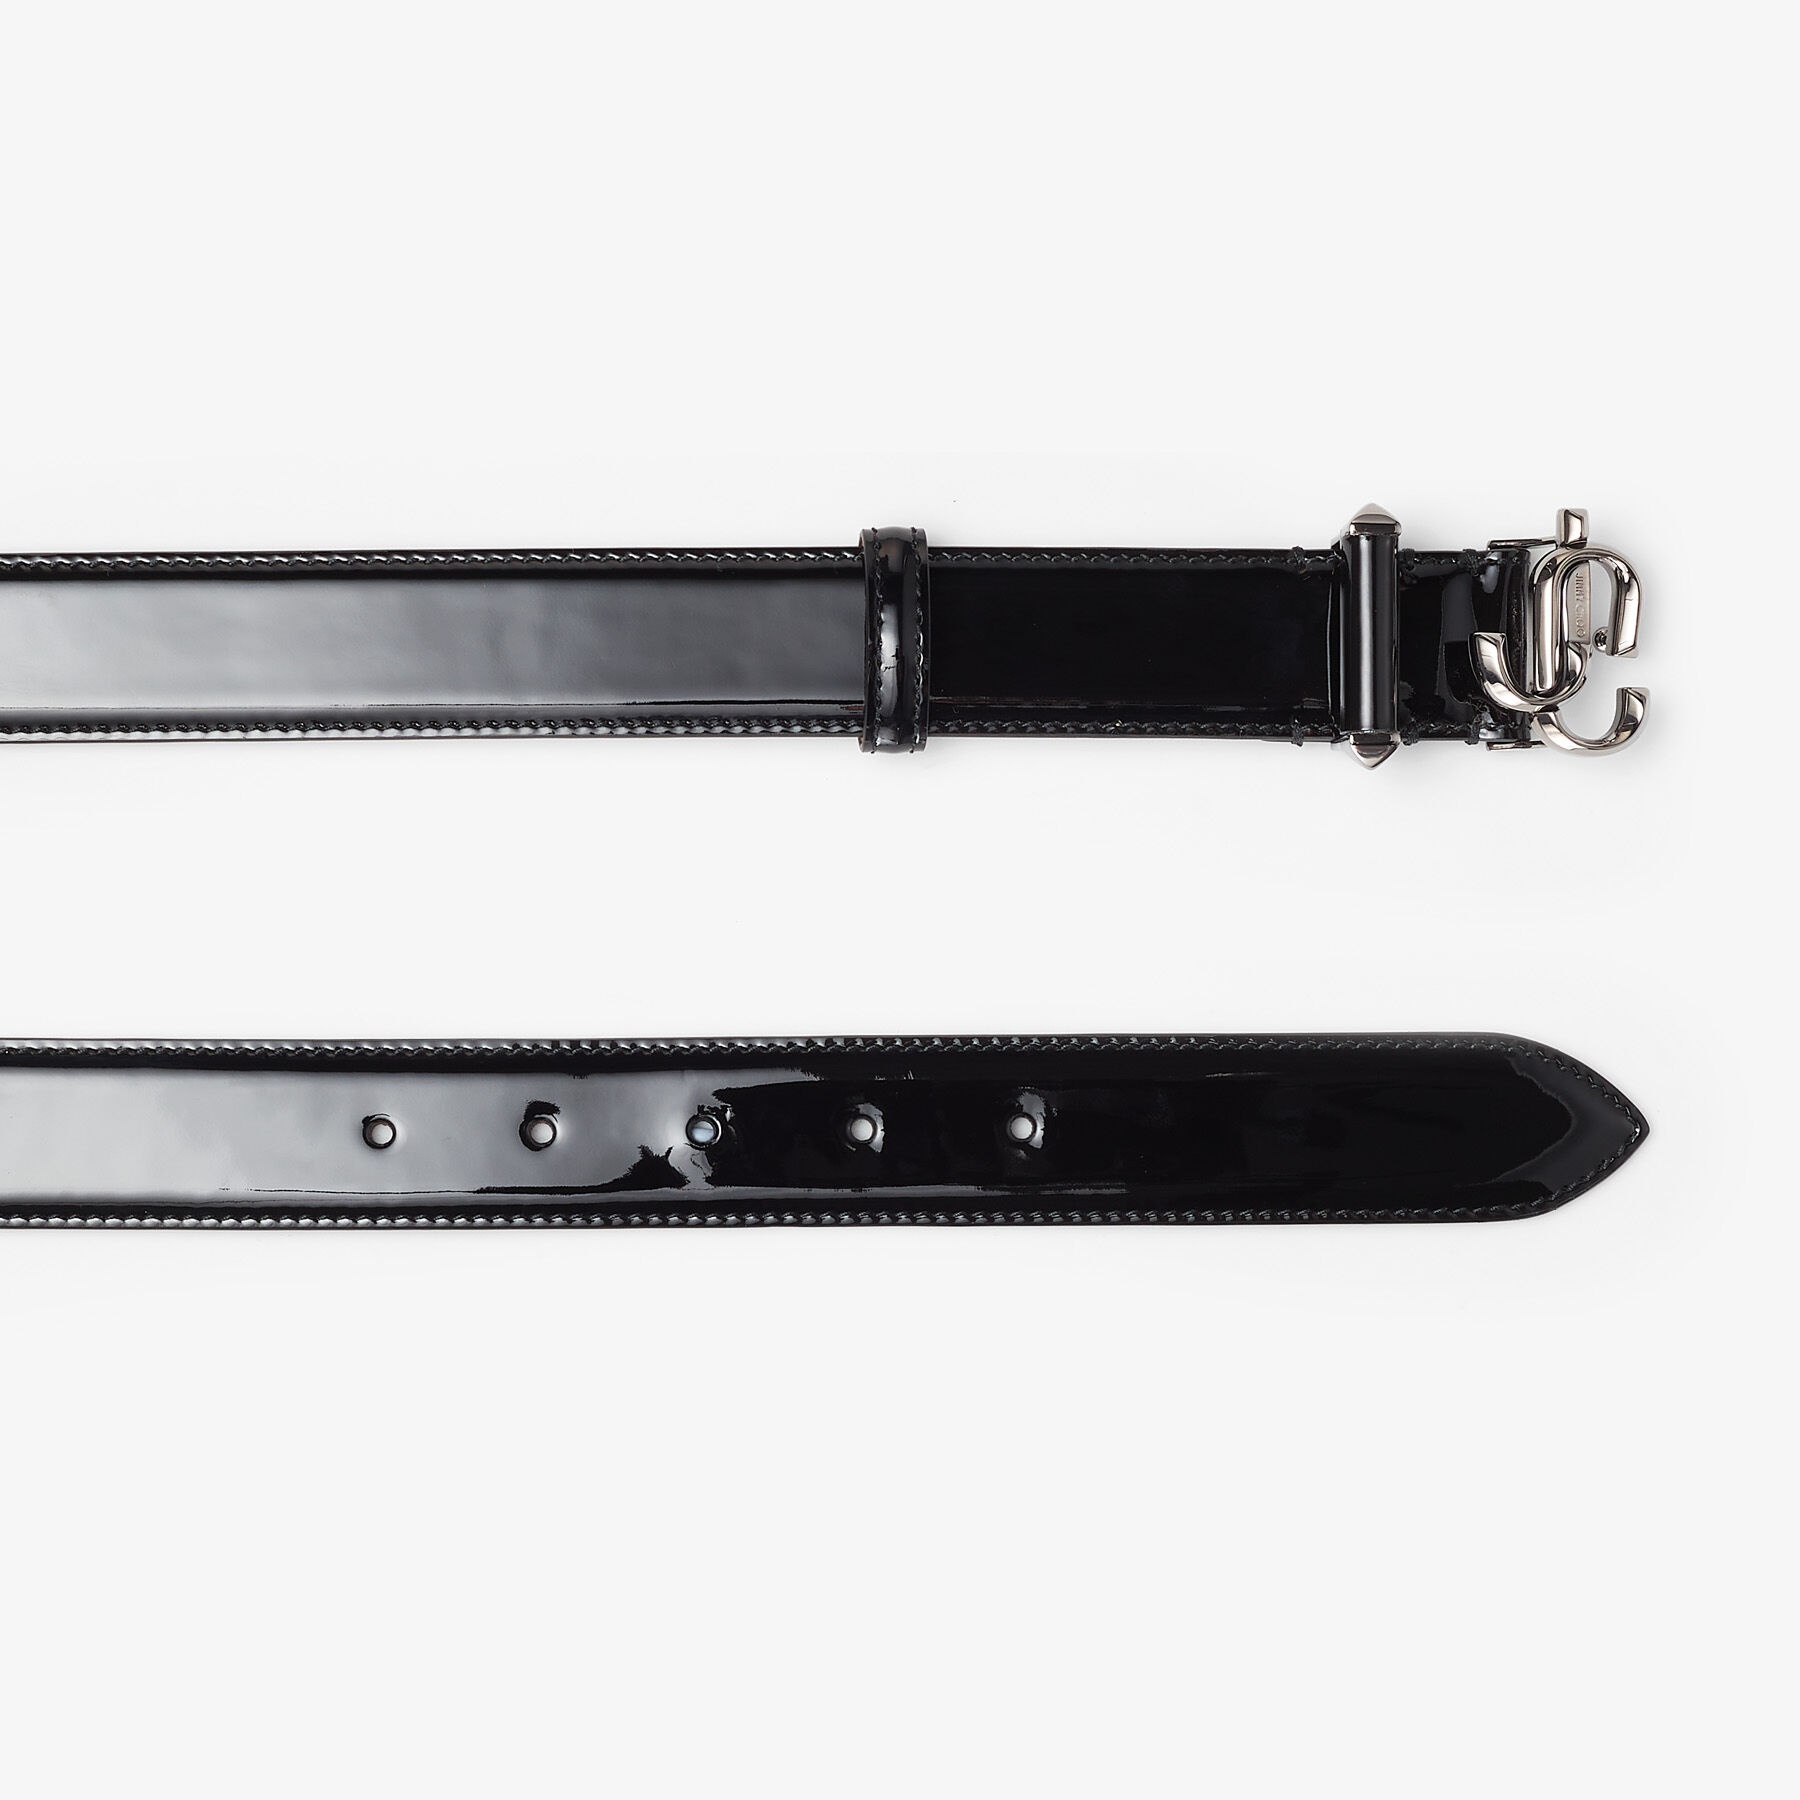 Jc-bar Blt
Black Patent Leather Bar Belt with JC Emblem - 4